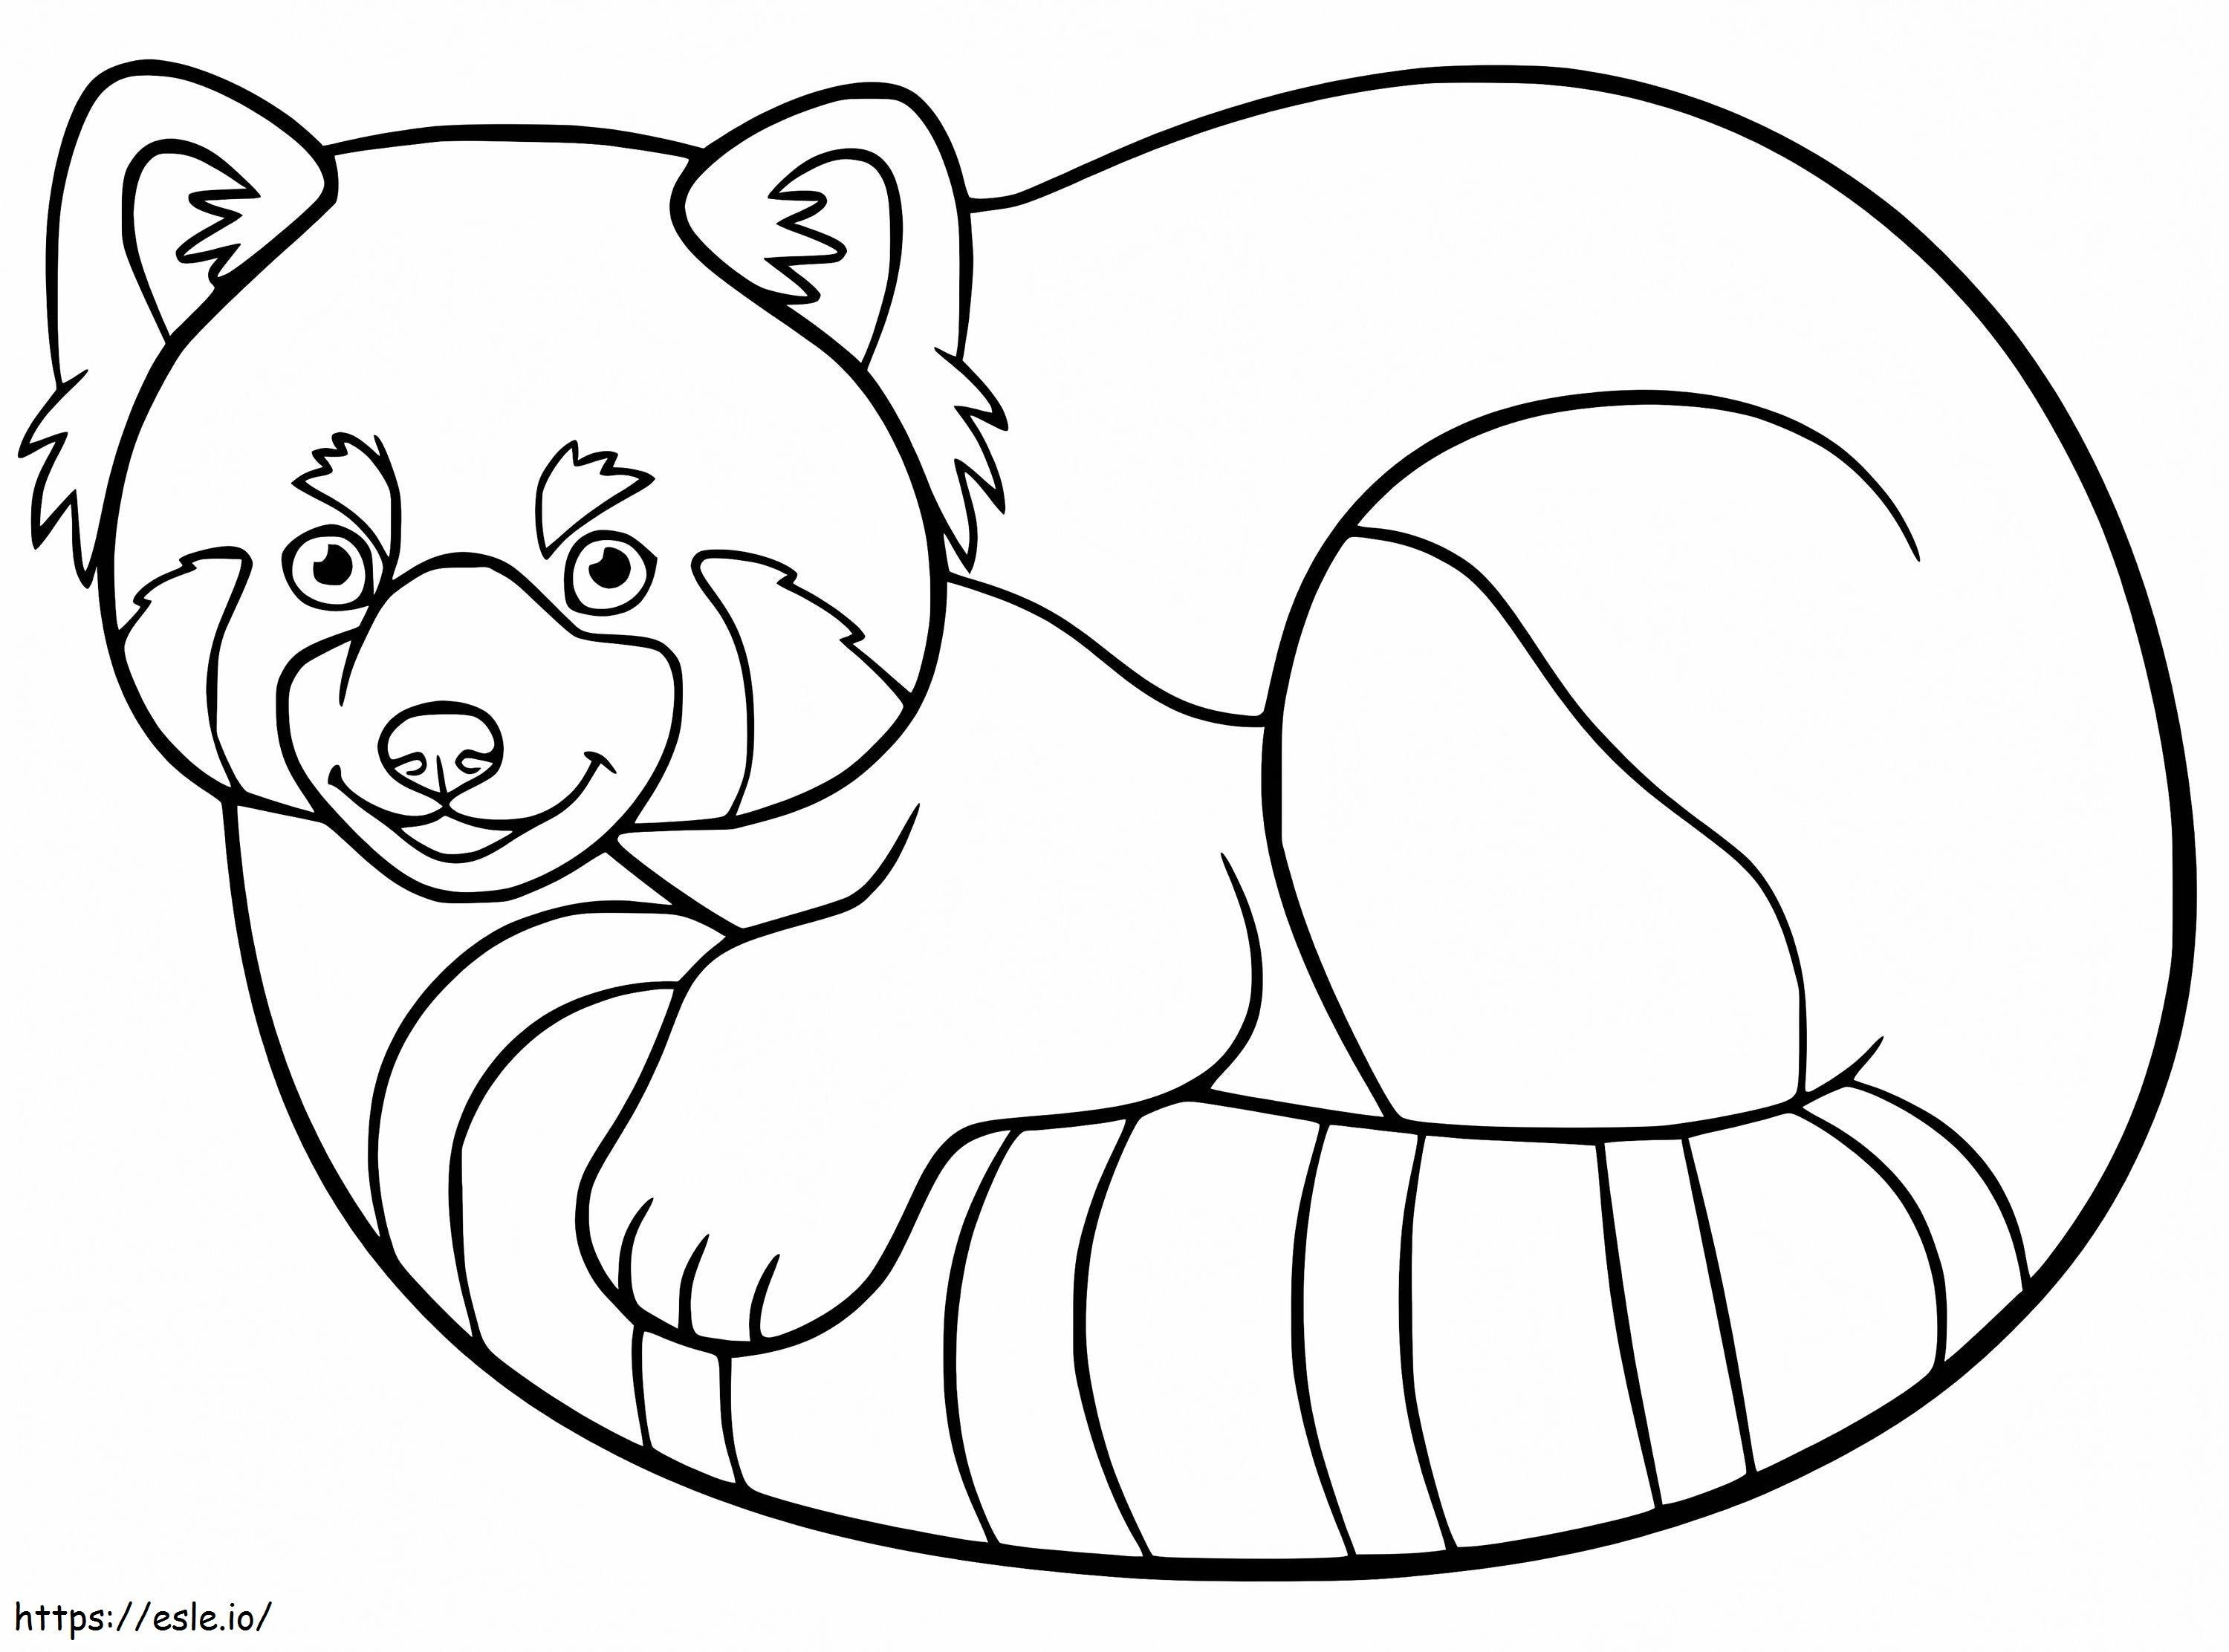 Red Panda 8 coloring page